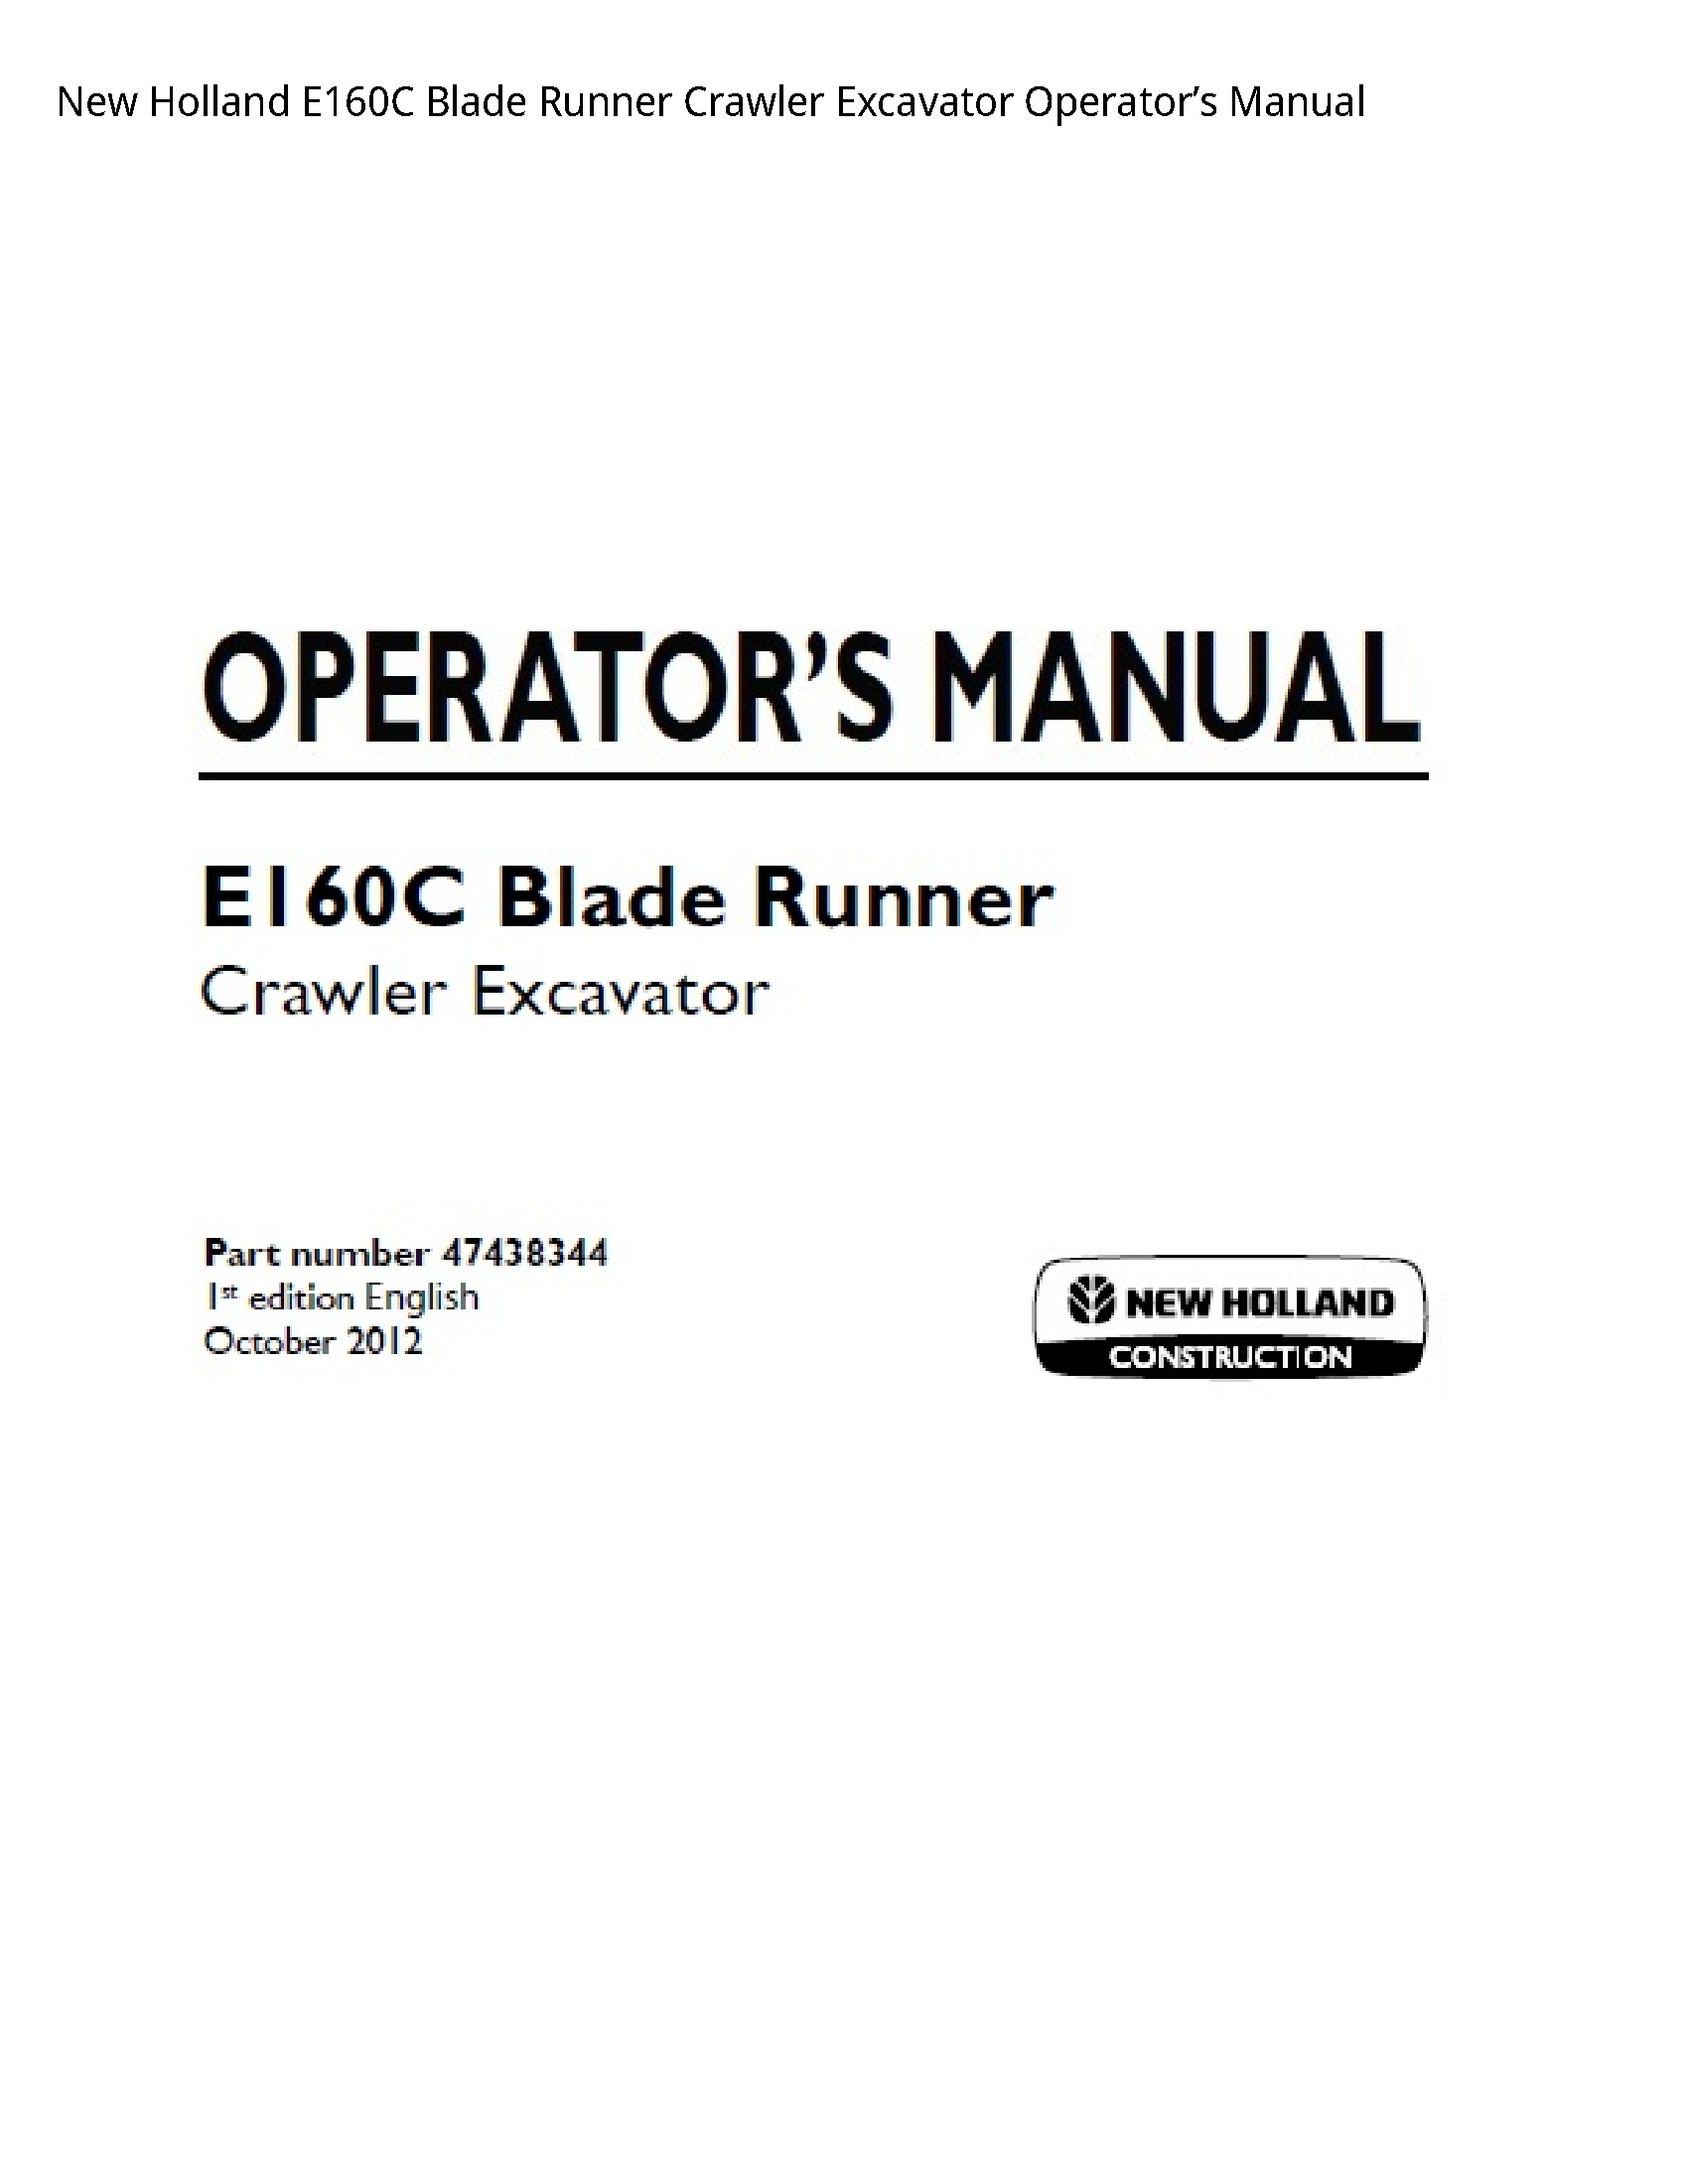 New Holland E160C Blade Runner Crawler Excavator Operator’s manual